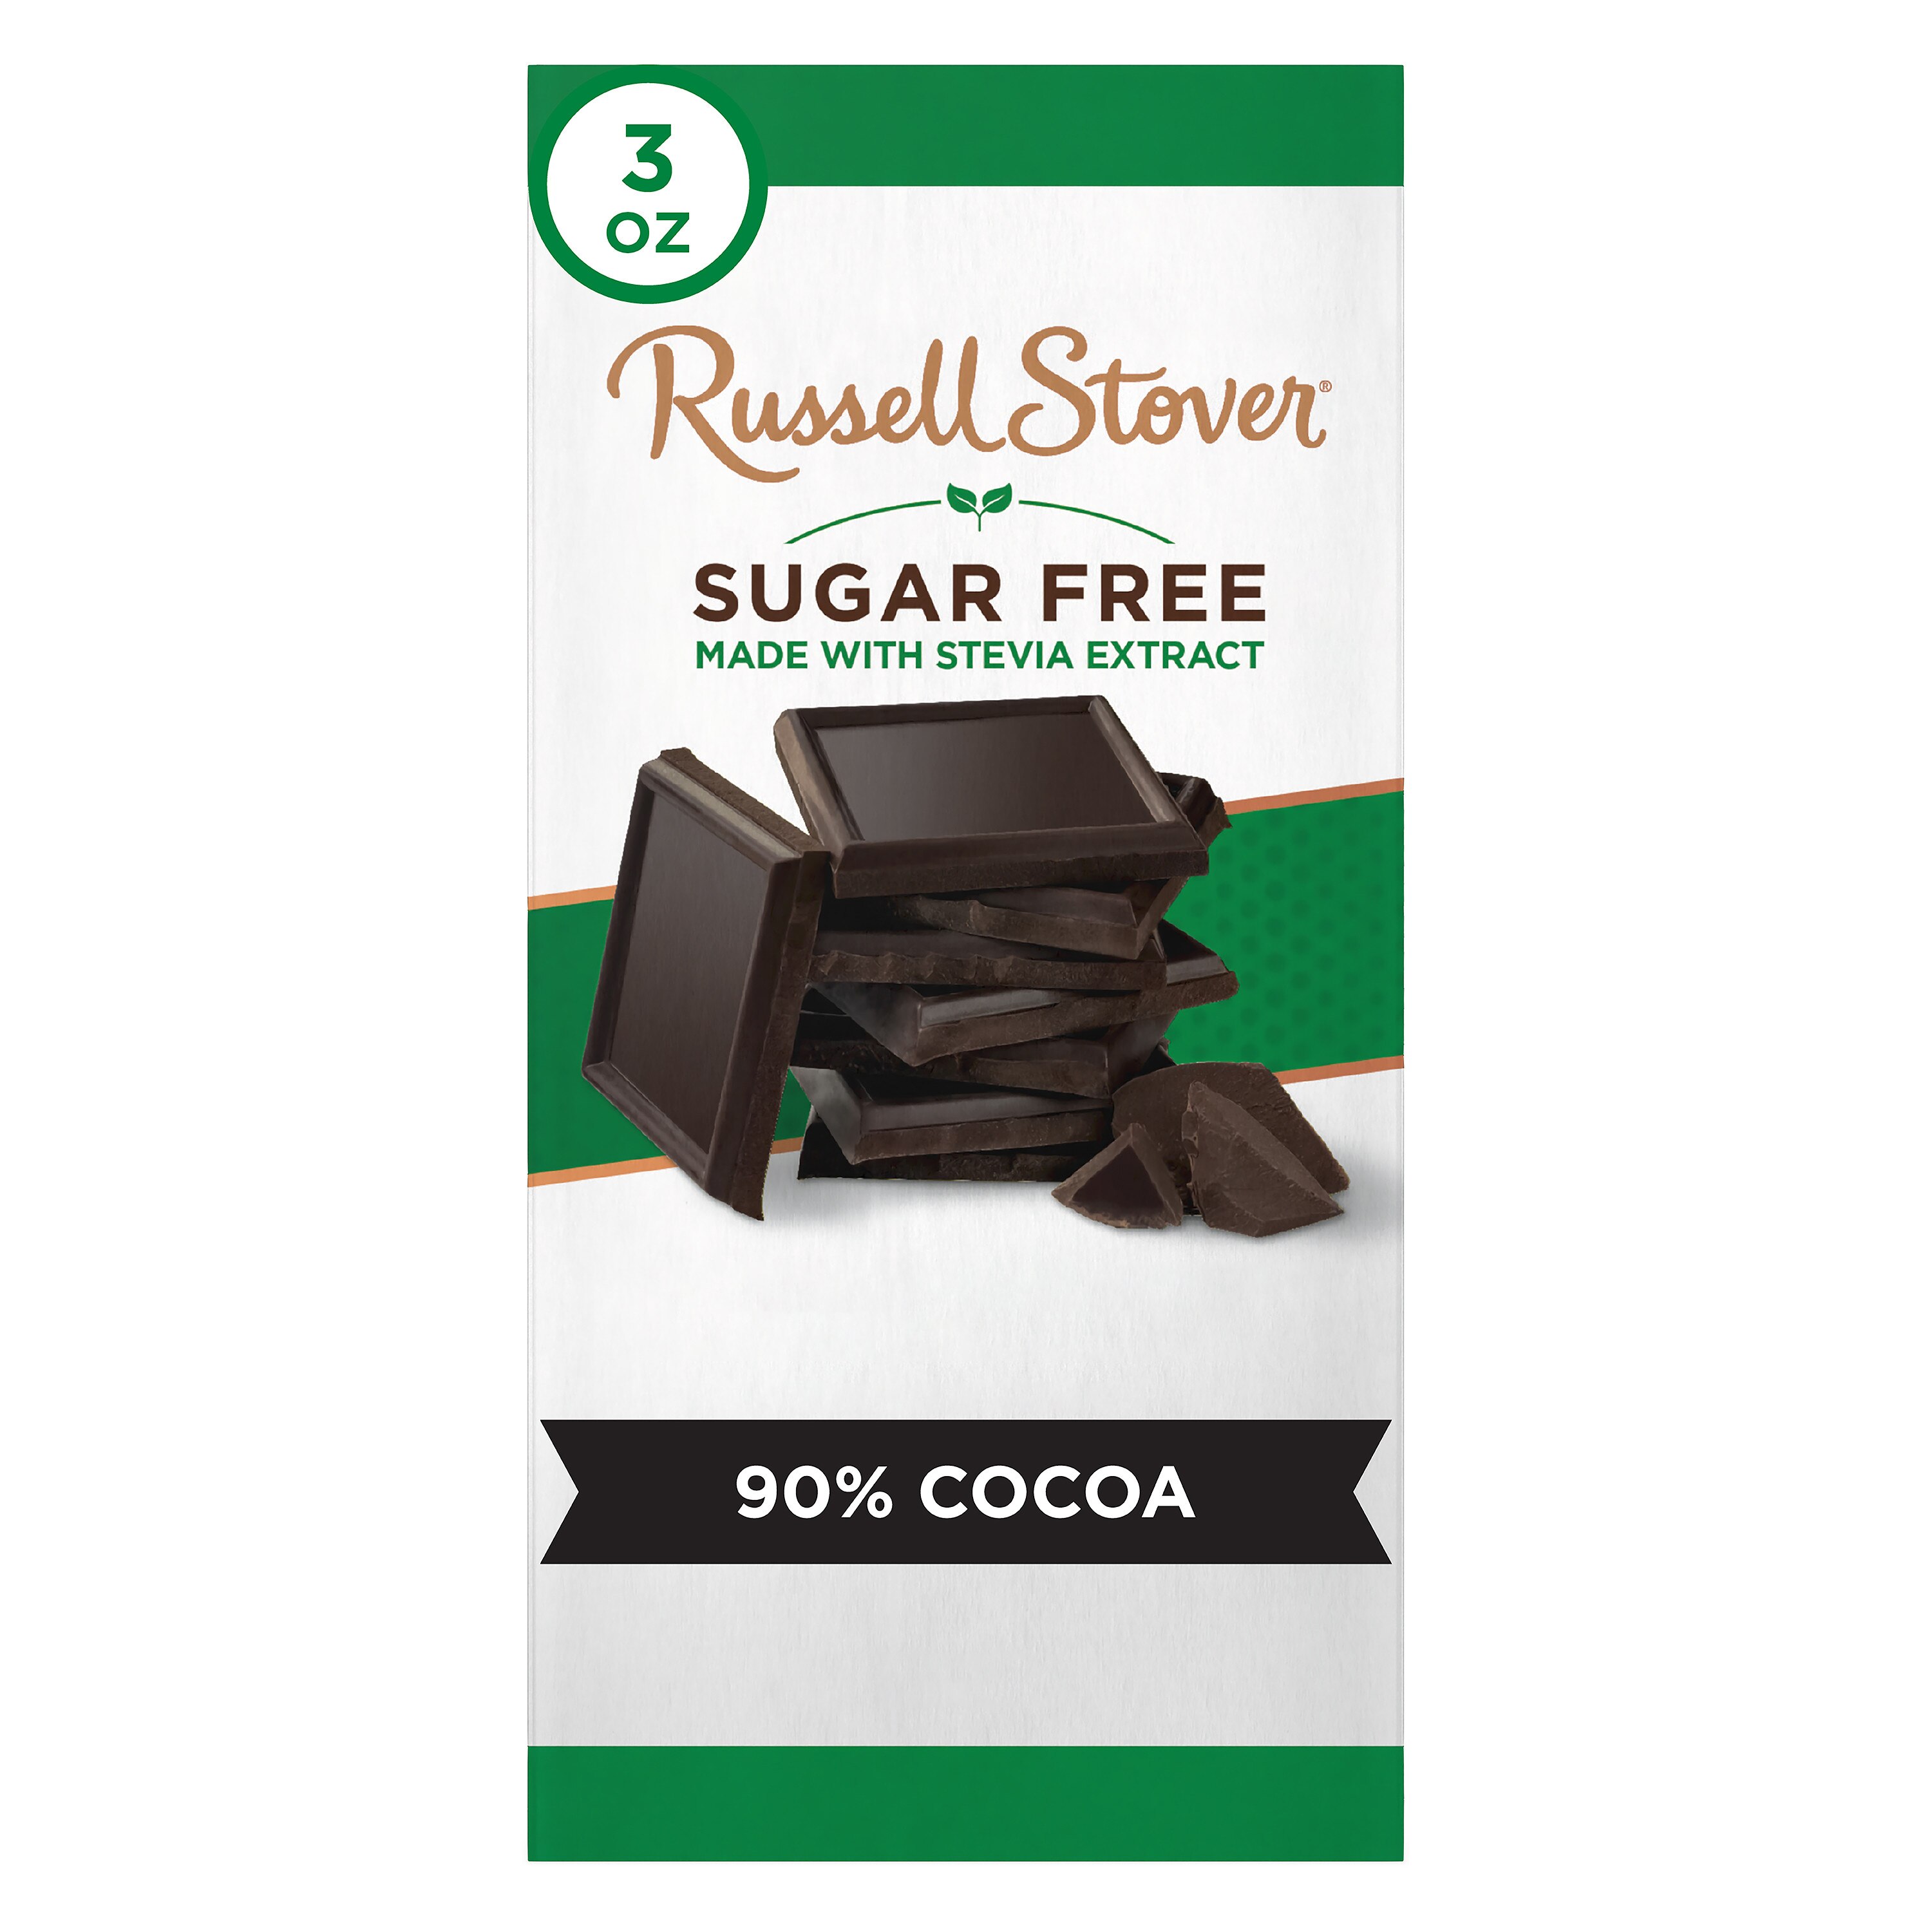 RUSSELL STOVER Sugar Free 90% Cocoa Dark Chocolate Bar, 3 OZ